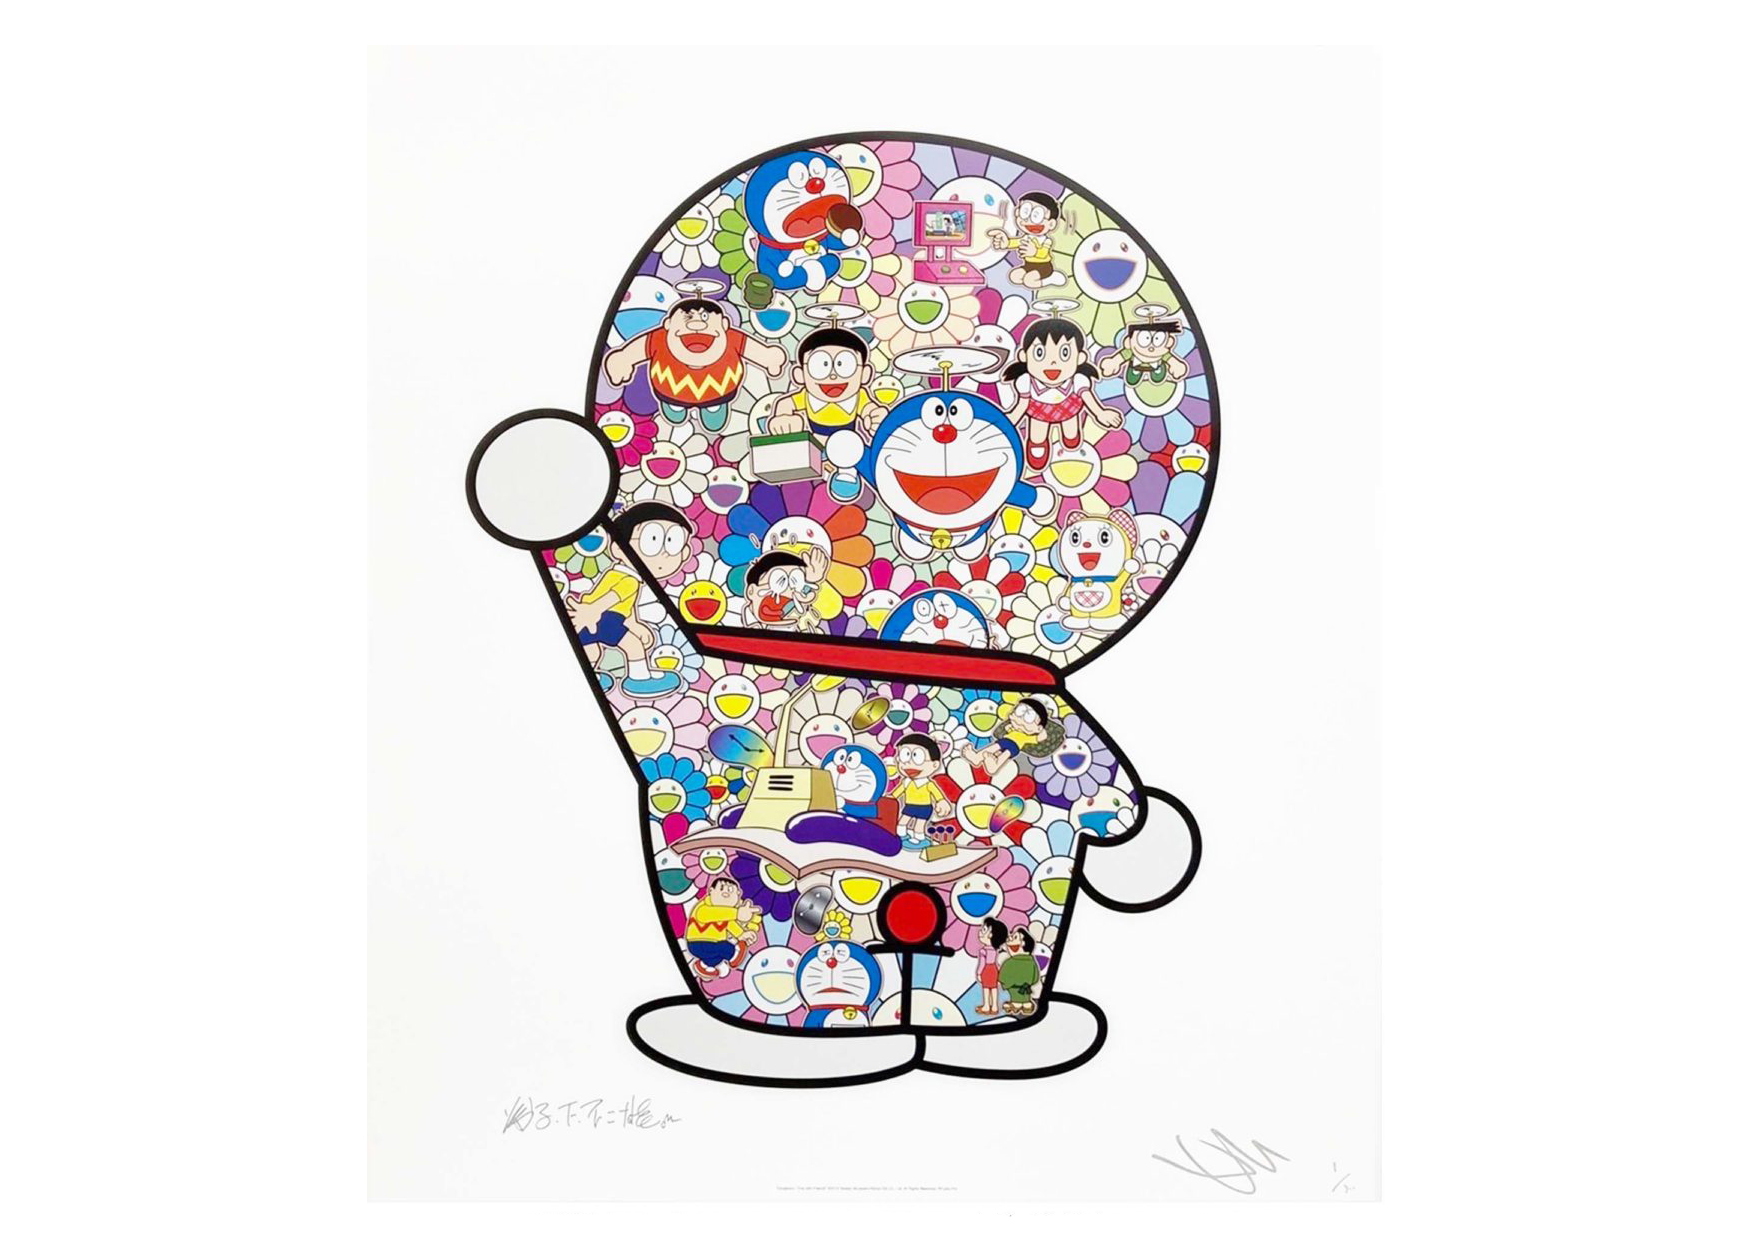 Takashi Murakami's Doraemon - For Sale on Artsy